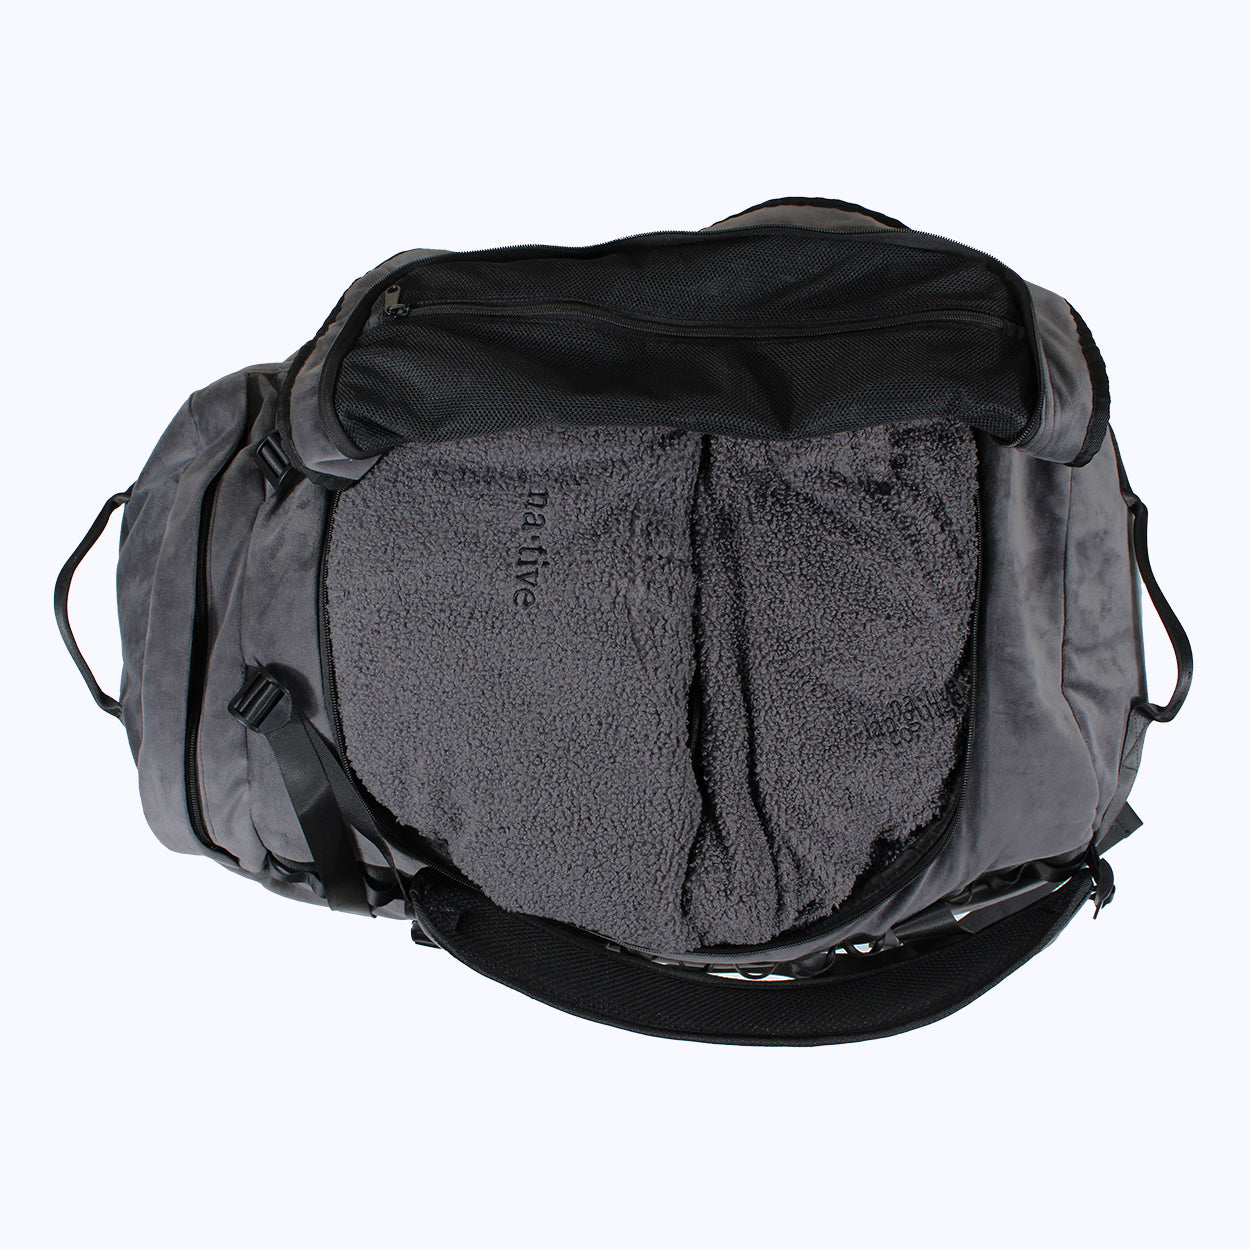 velour duffel bag backpack in charcoal